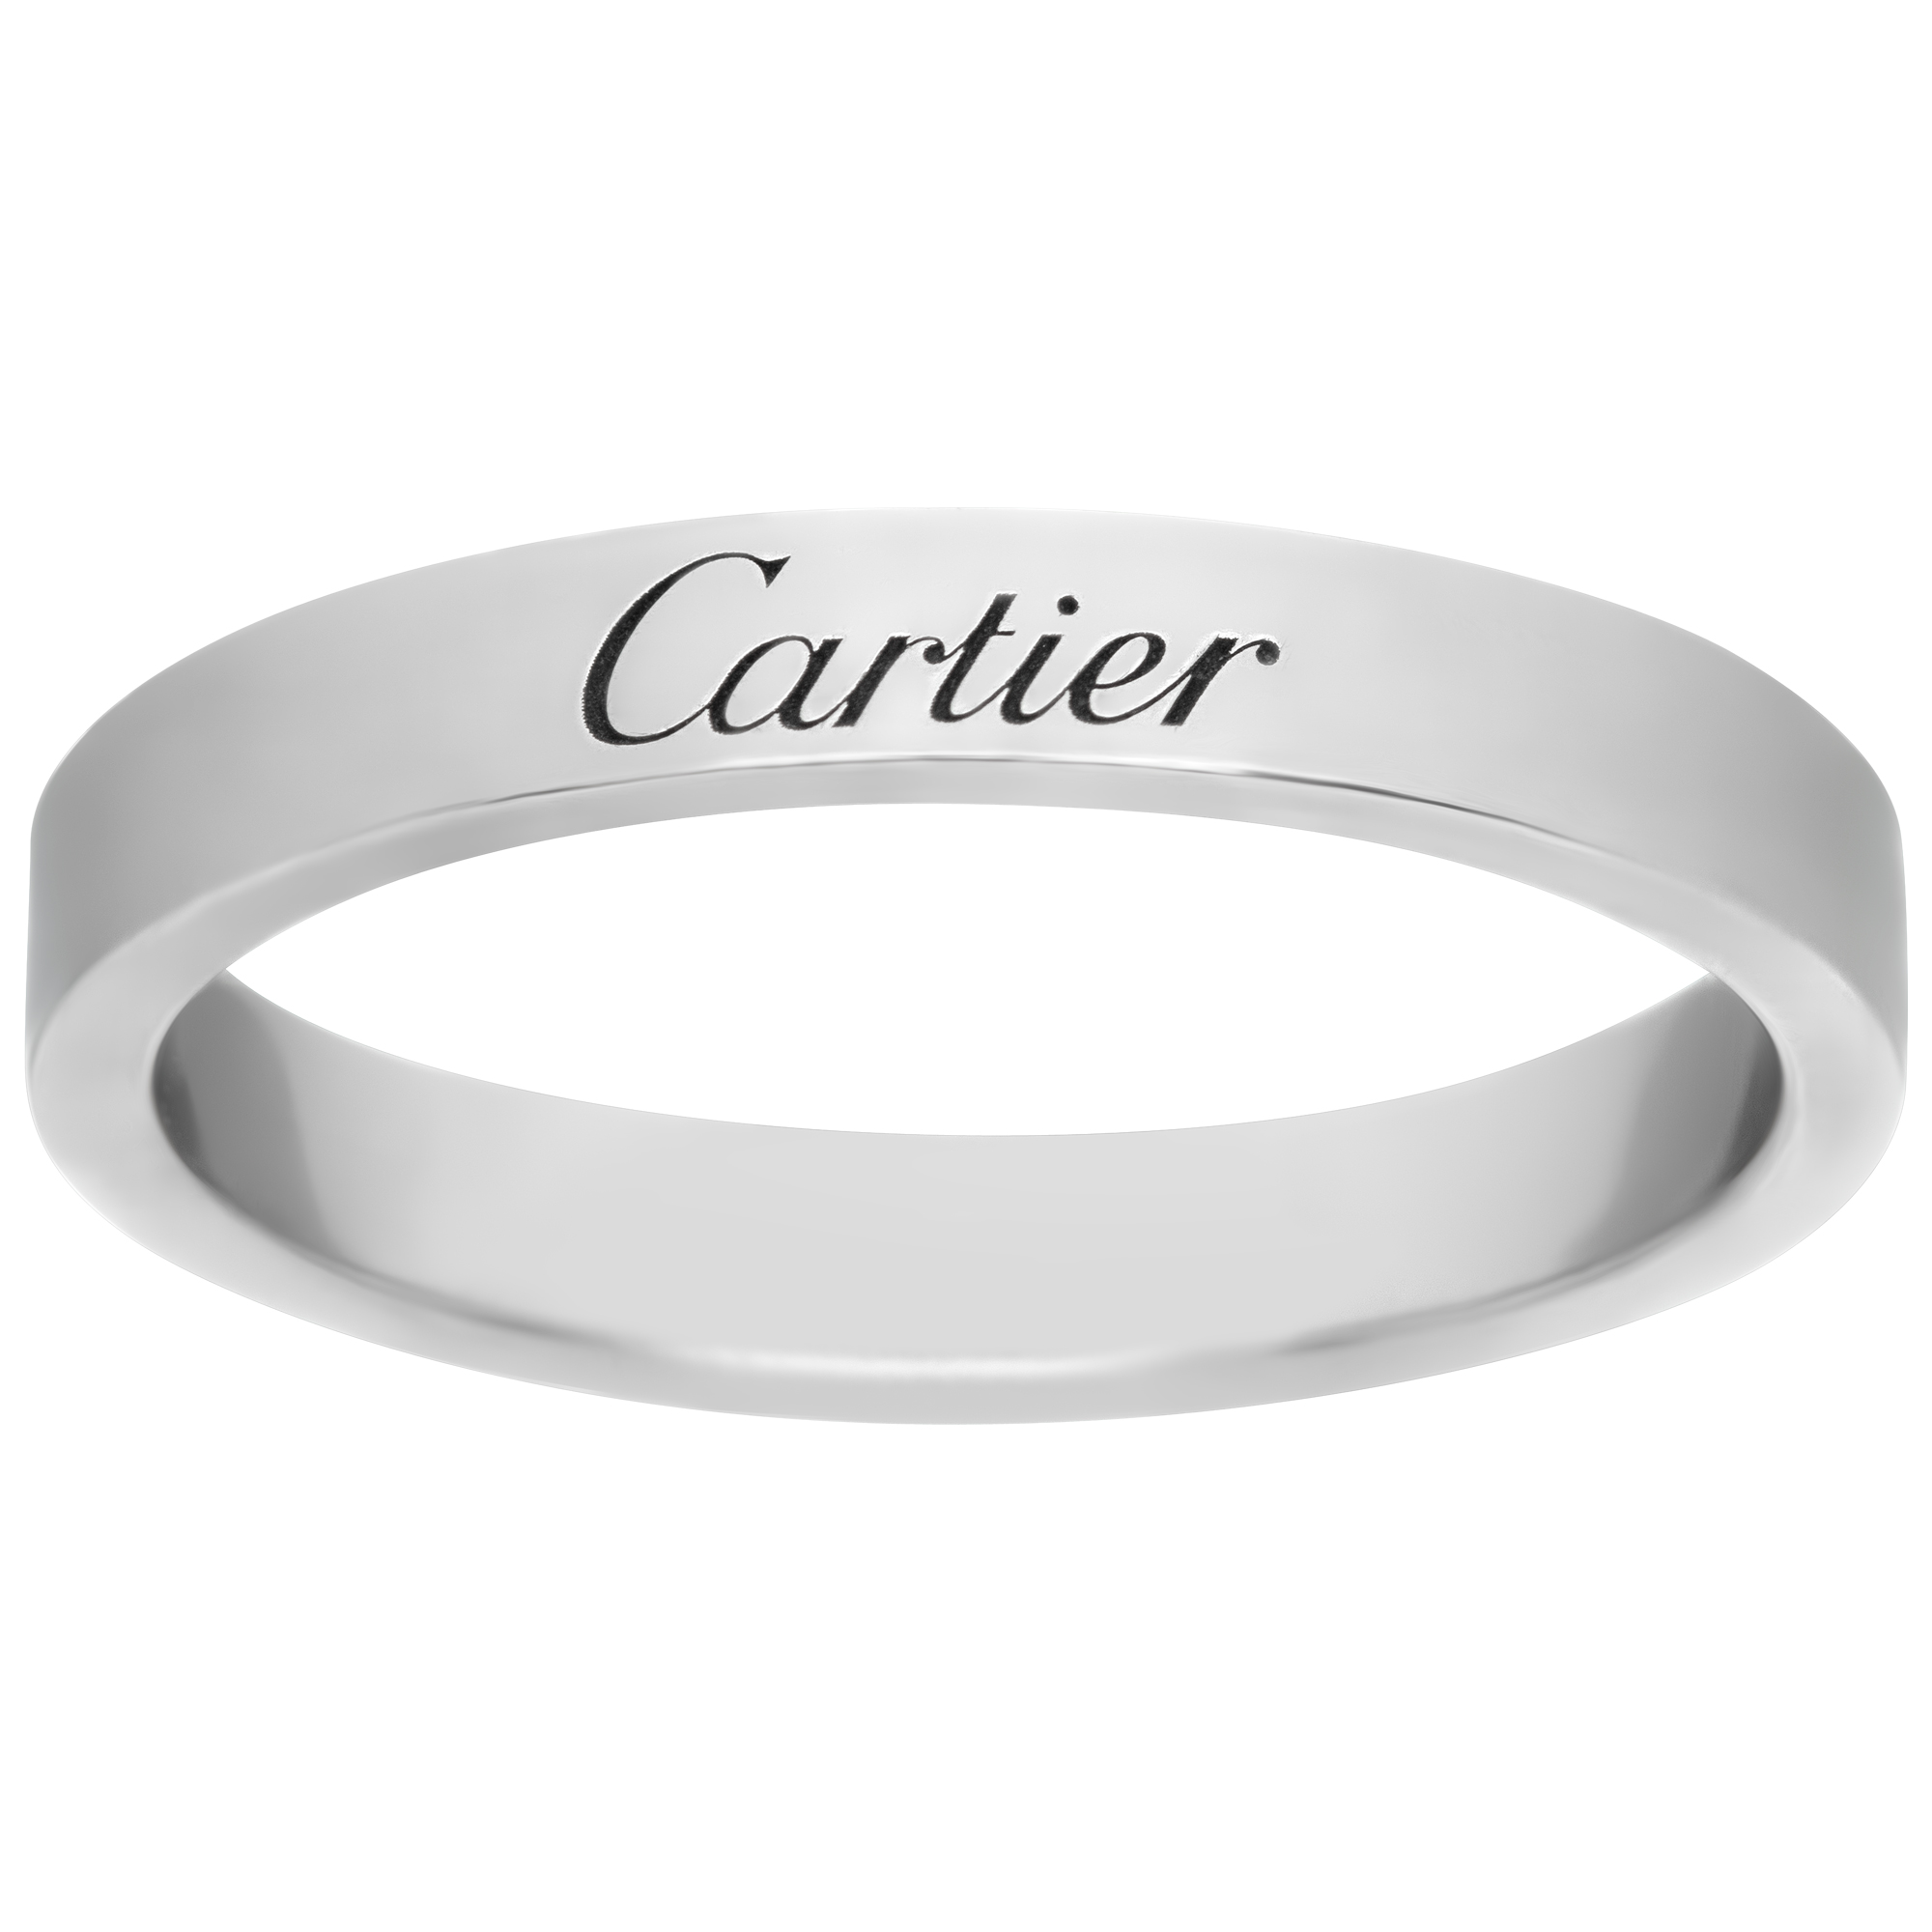 C De Cartier wedding band in platinum. 3mm width. Euro size 57 (US size 8) (Default)